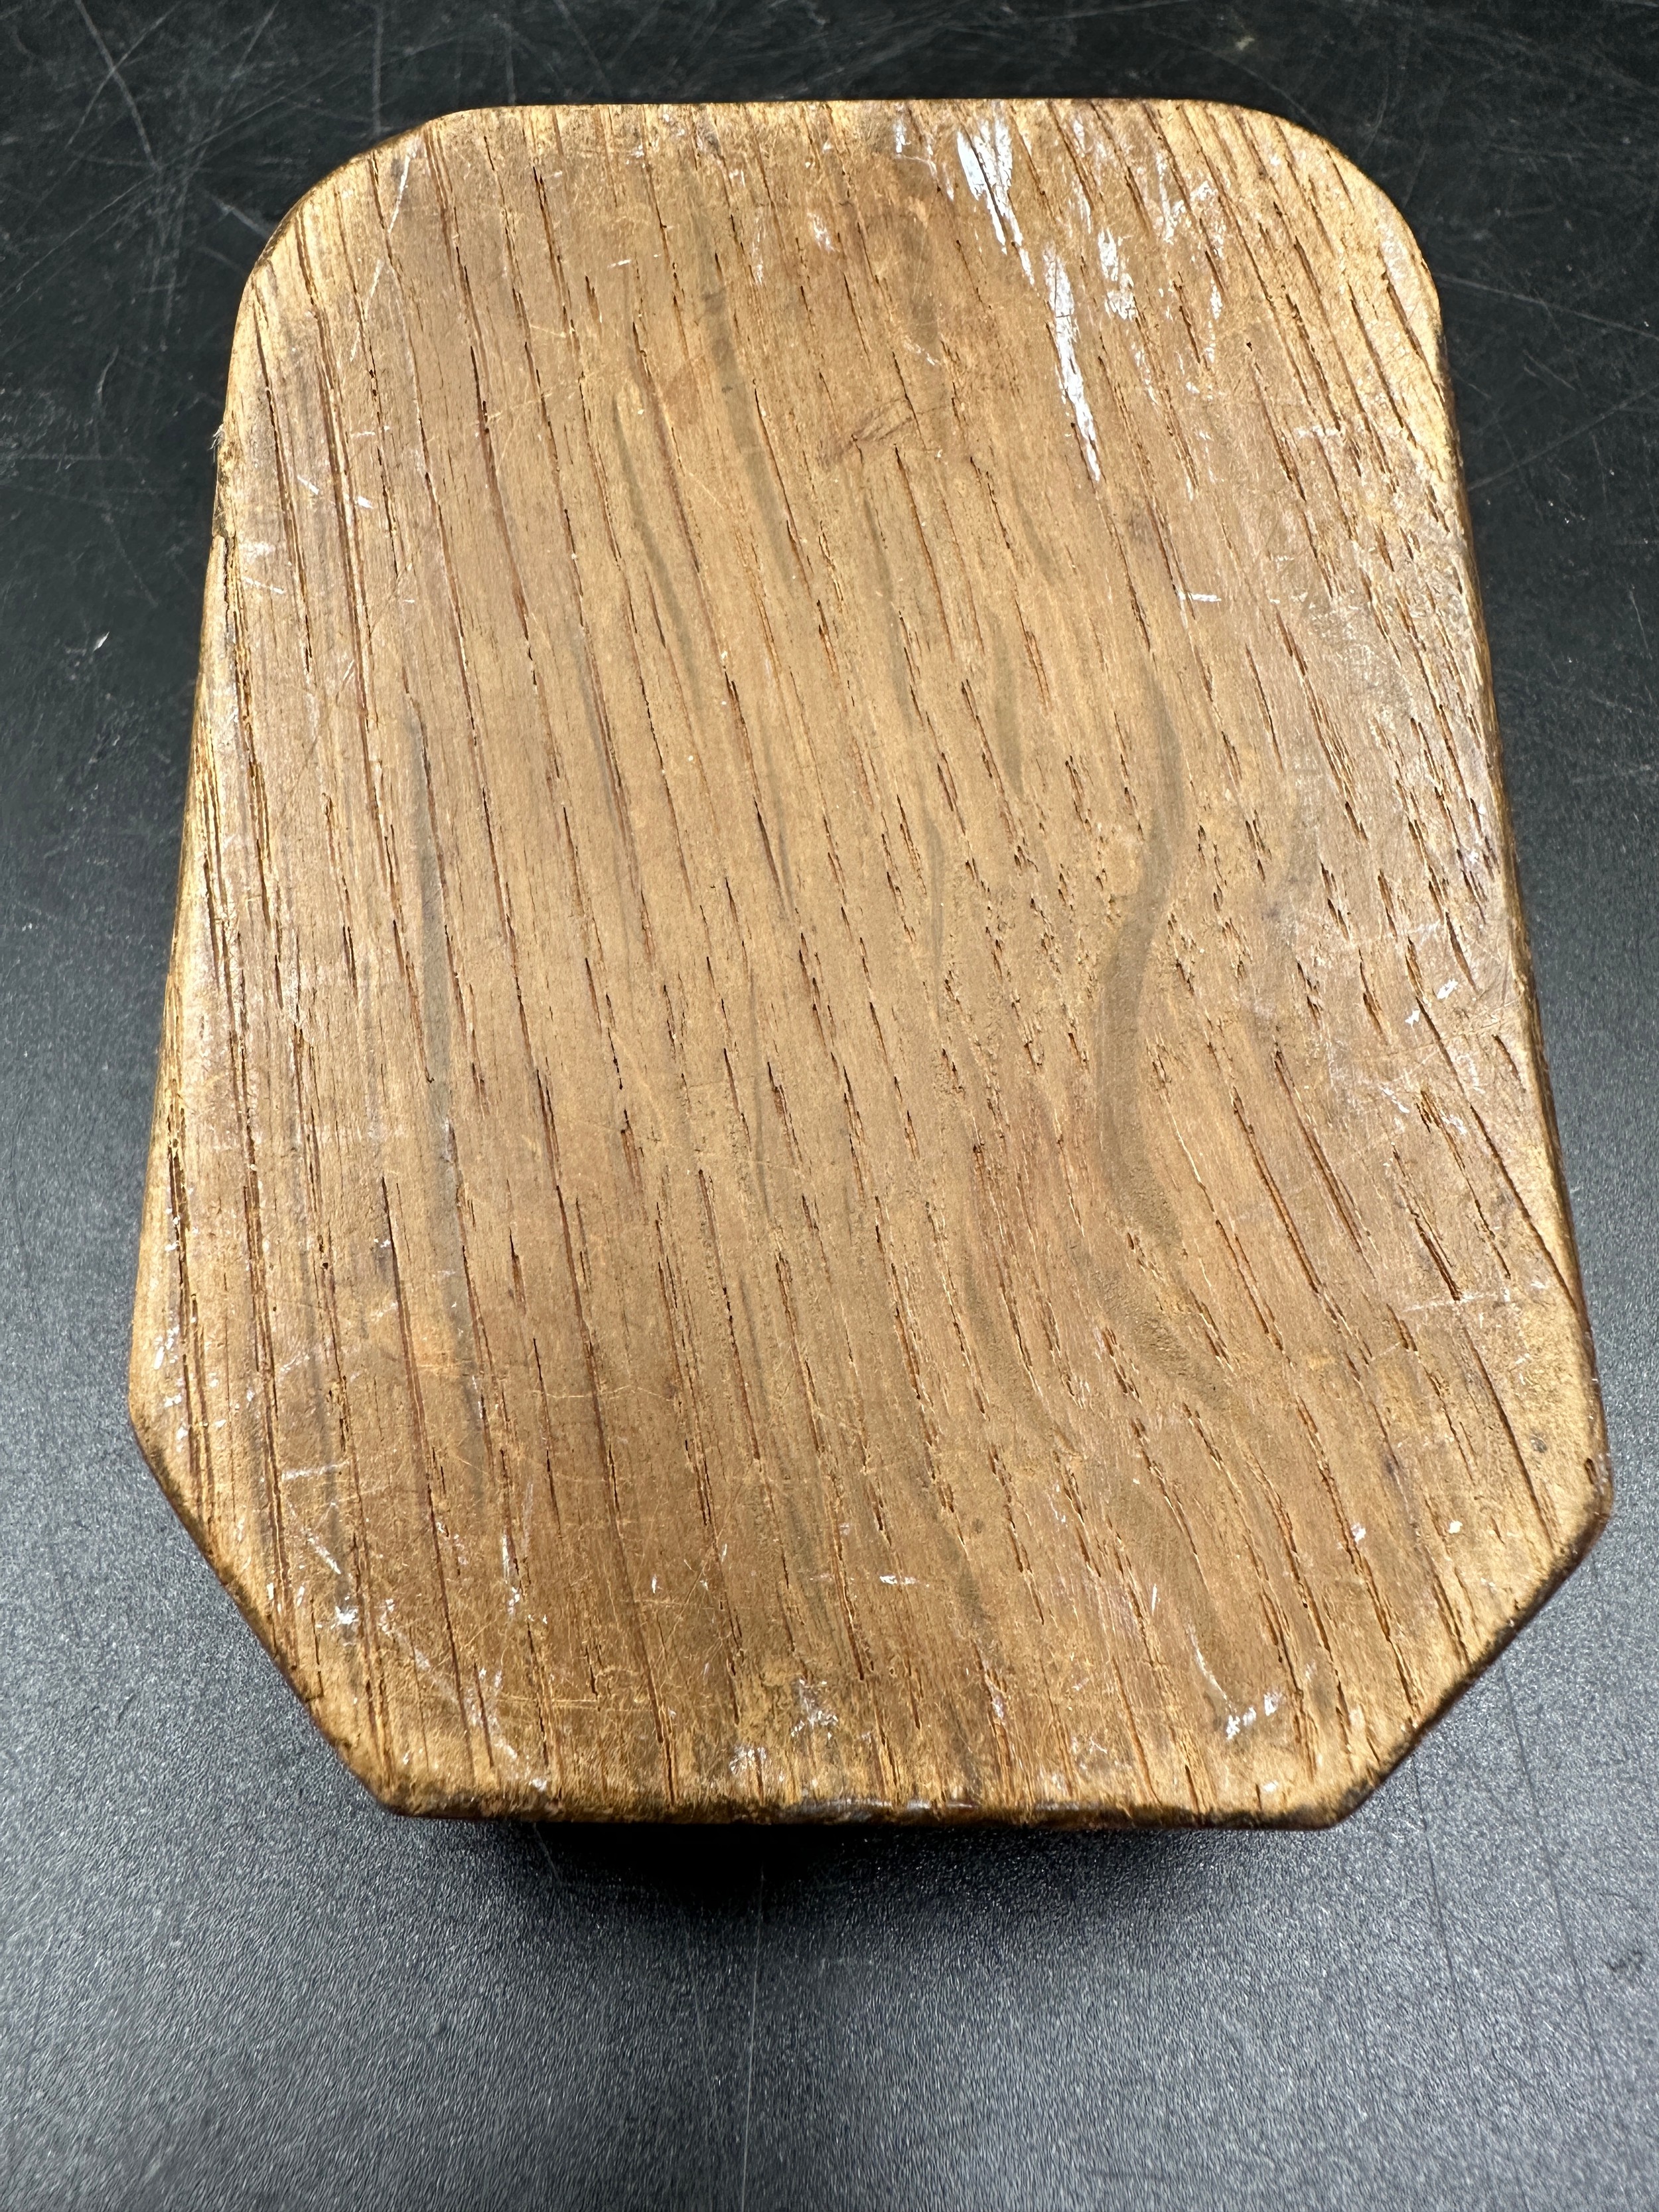 Robert Thompson 'Mouseman' Oak ashtray tail to left 10cm x 7cm. - Image 3 of 3